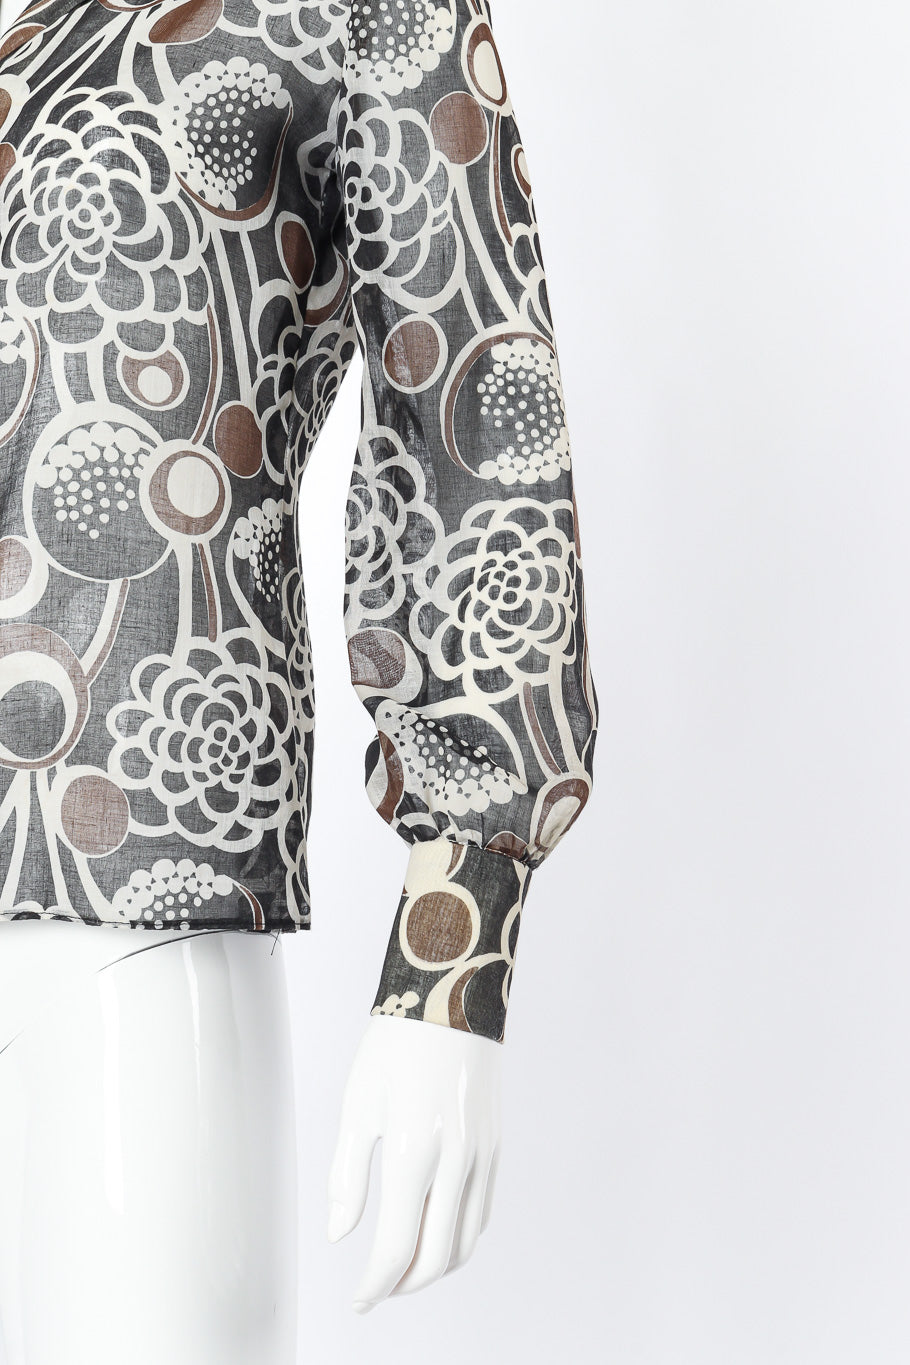 Vintage Nelly de Grab Abstract Dot Print Blouse & Skirt Set sleeve closeup on mannequin @Recessla